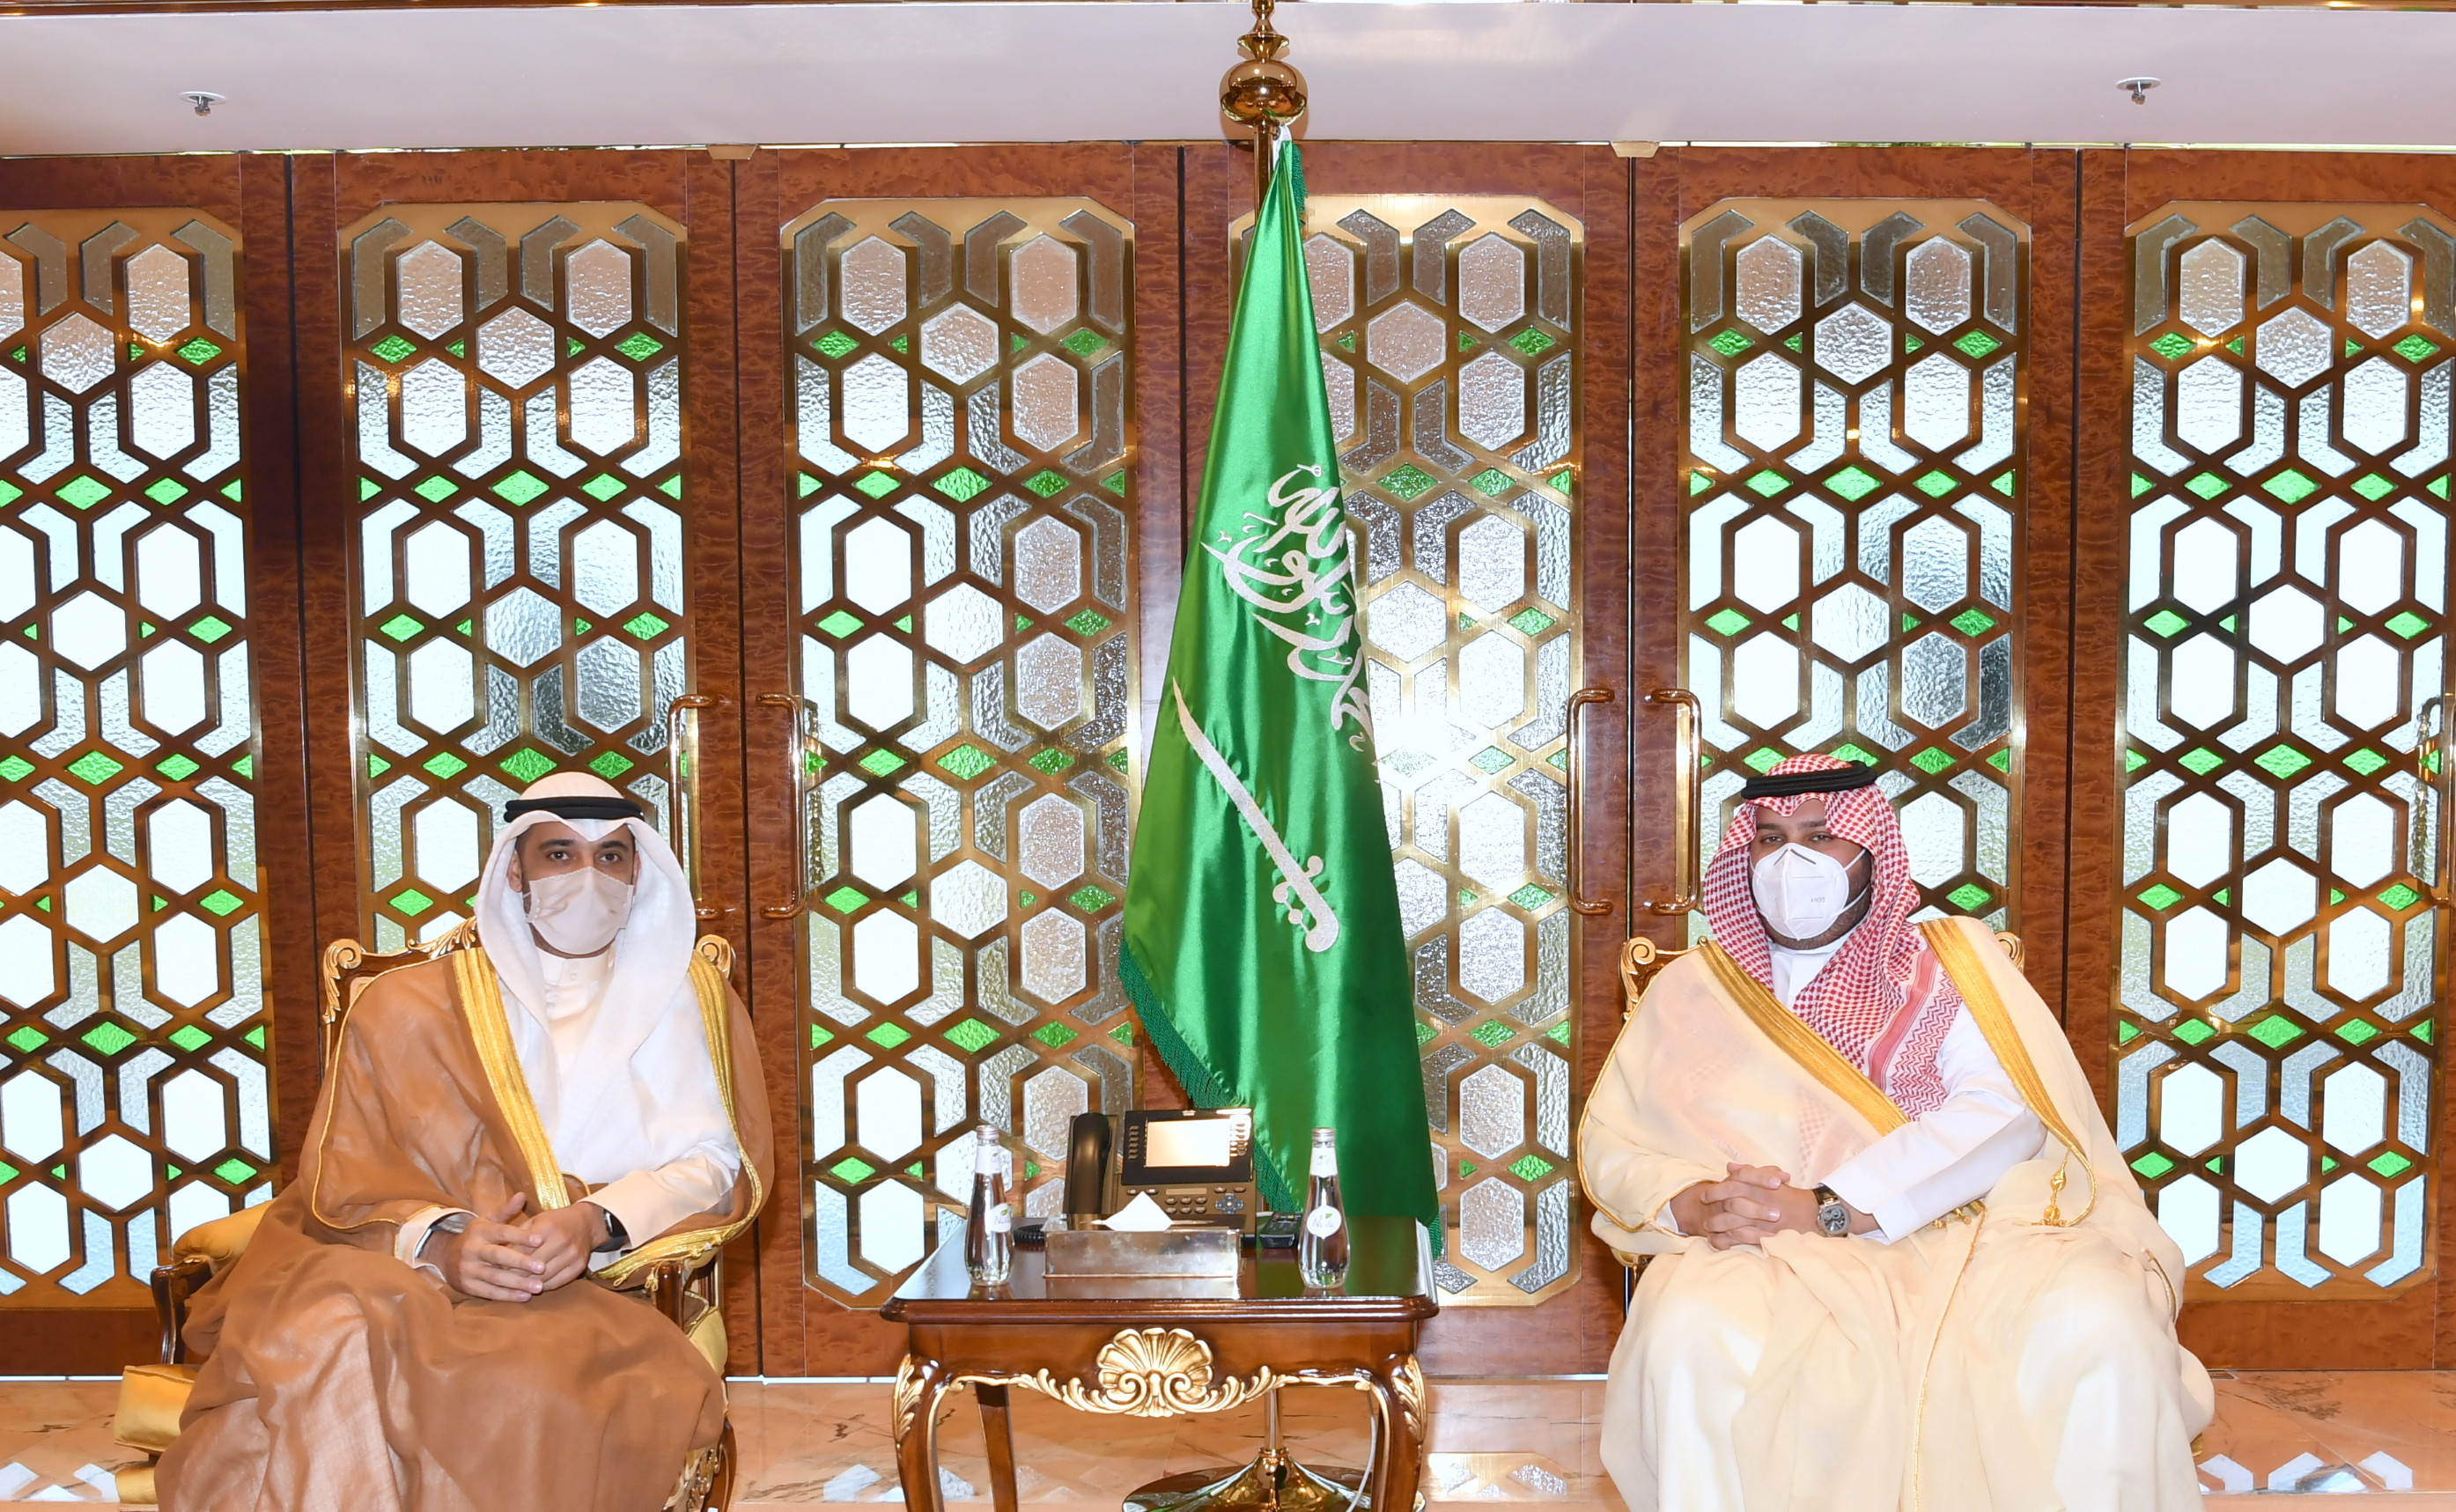 Sheikh Mohammad Abdullah Al-Mubarak Al-Sabah and Prince Turki bin Mohammad bin Fahad Al-Saud